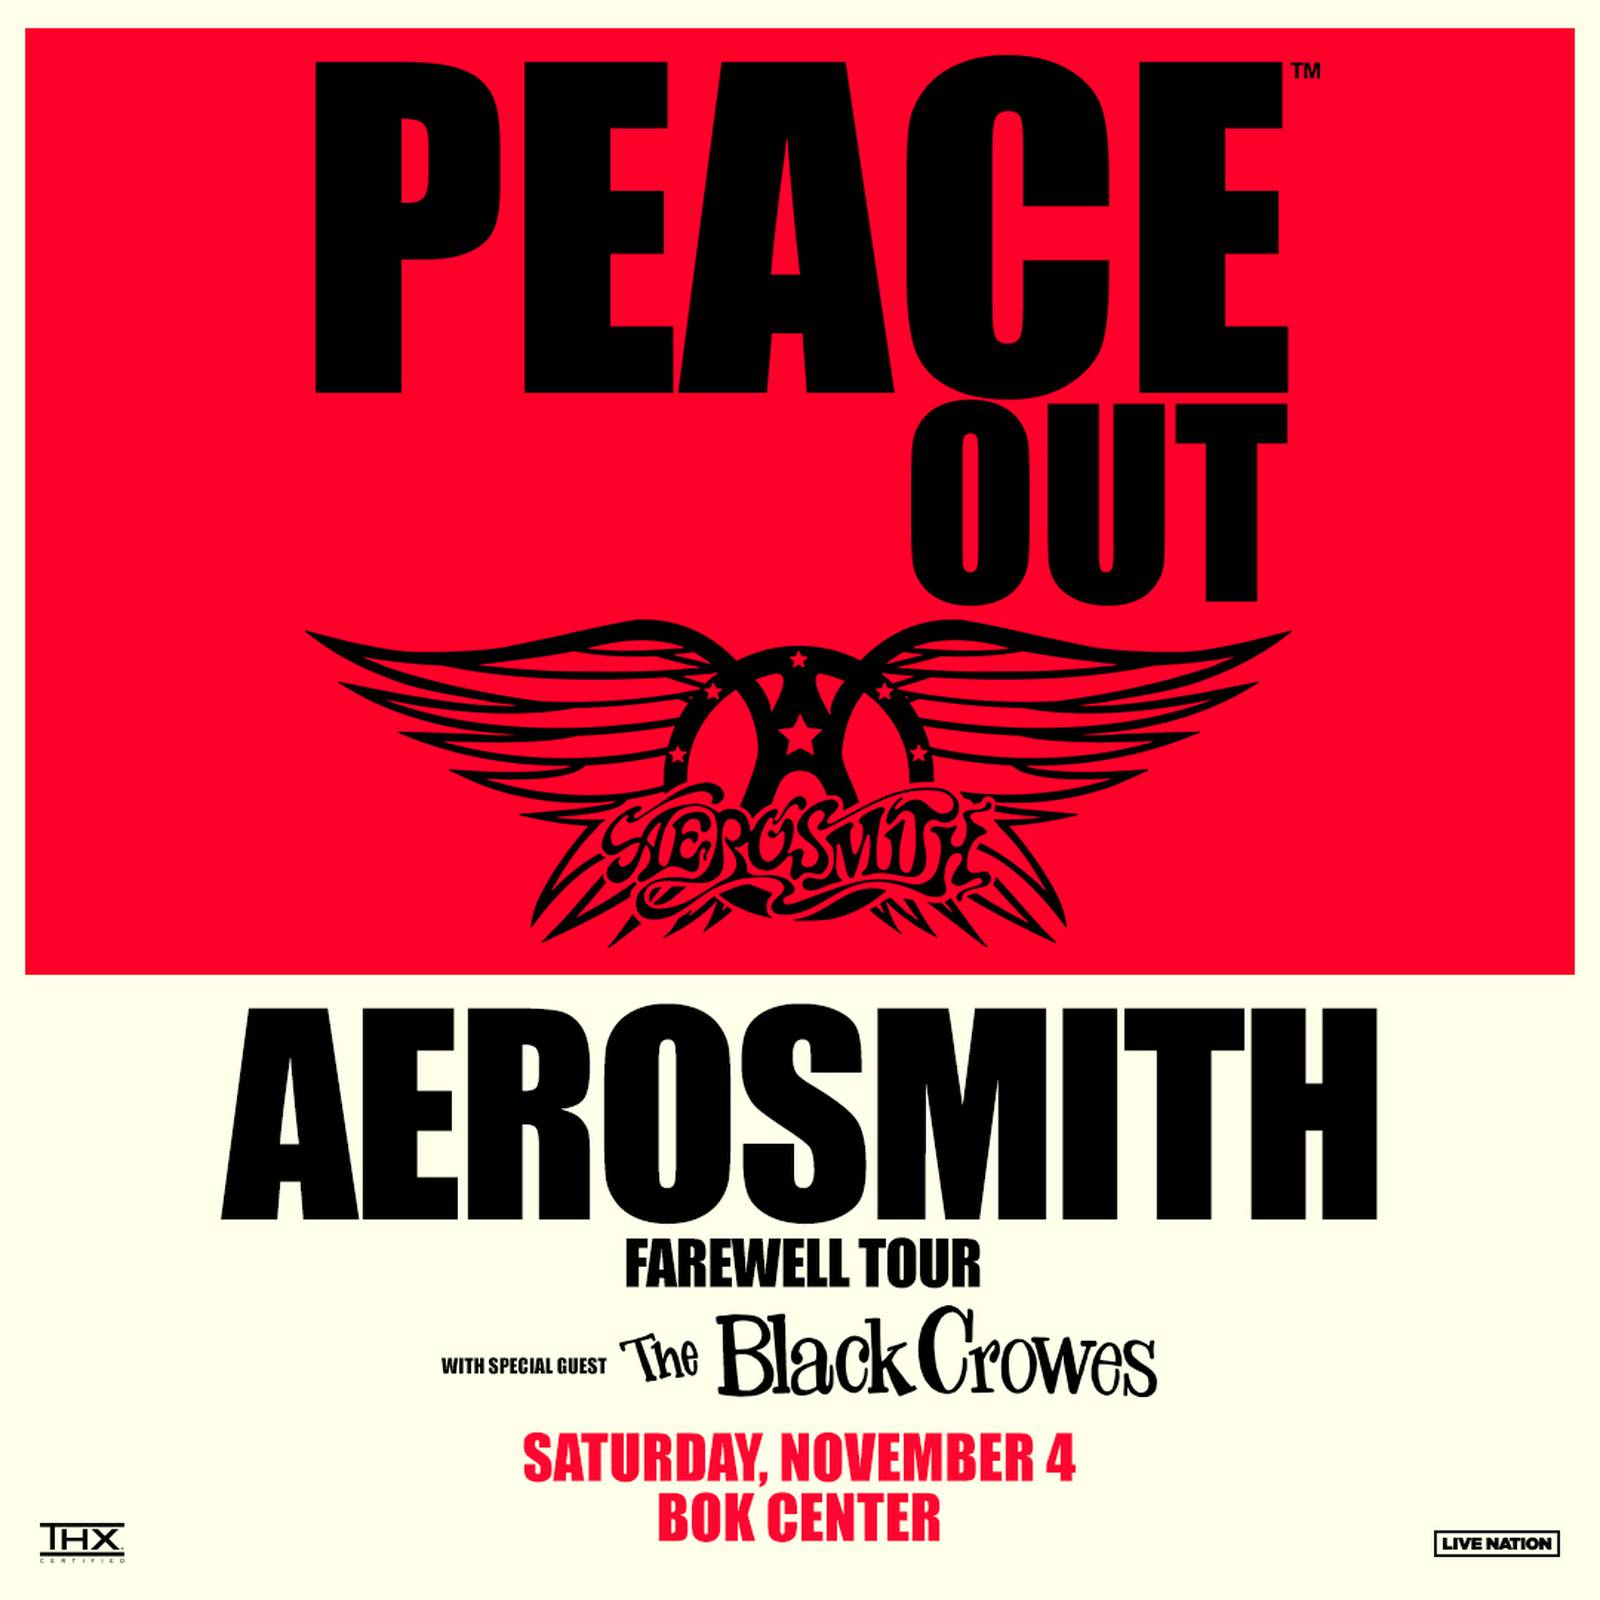 Aerosmith announces farewell tour stop at Tulsa’s BOK Center 102.3 KRMG